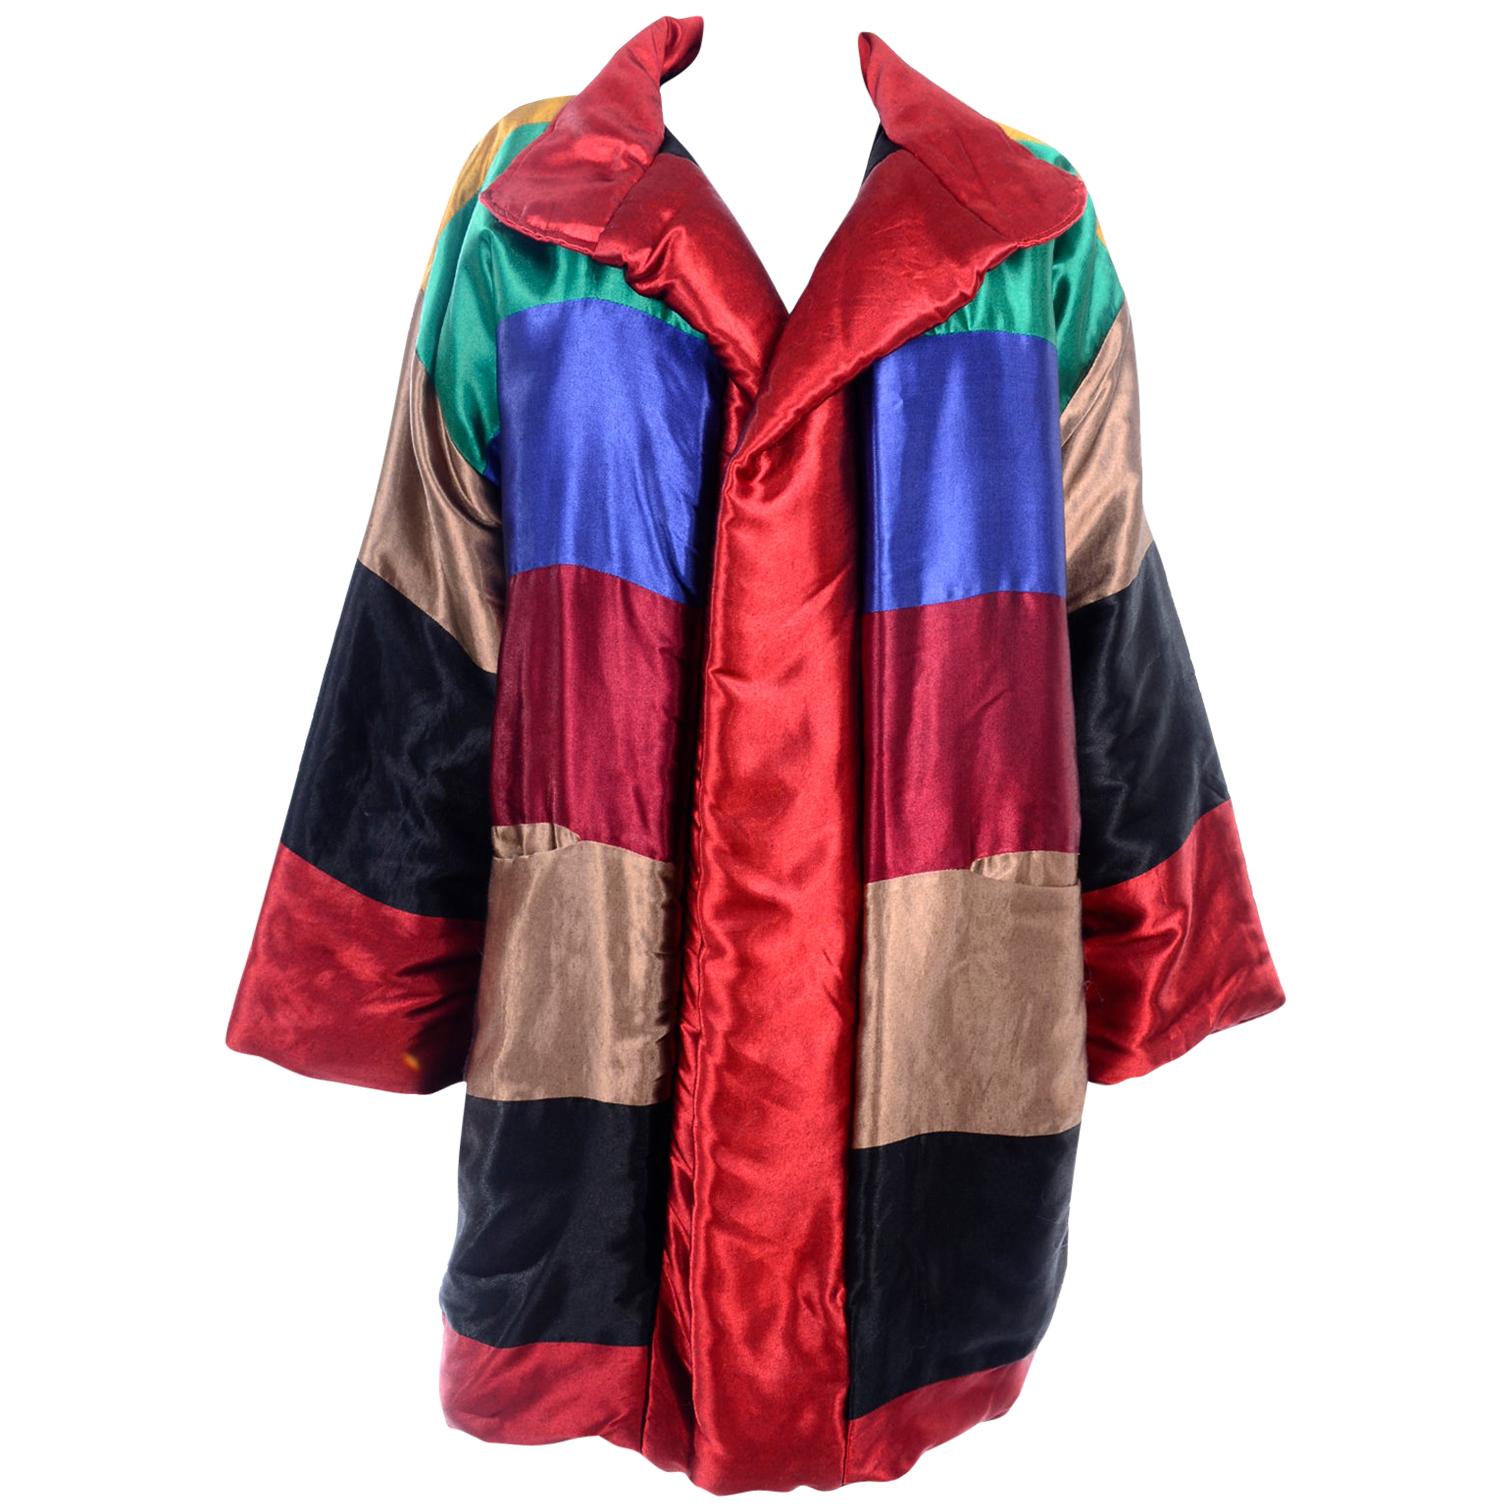 1980s Neiman Marcus Colorful Reversible Jacket Vintage Rainbow Satin Coat